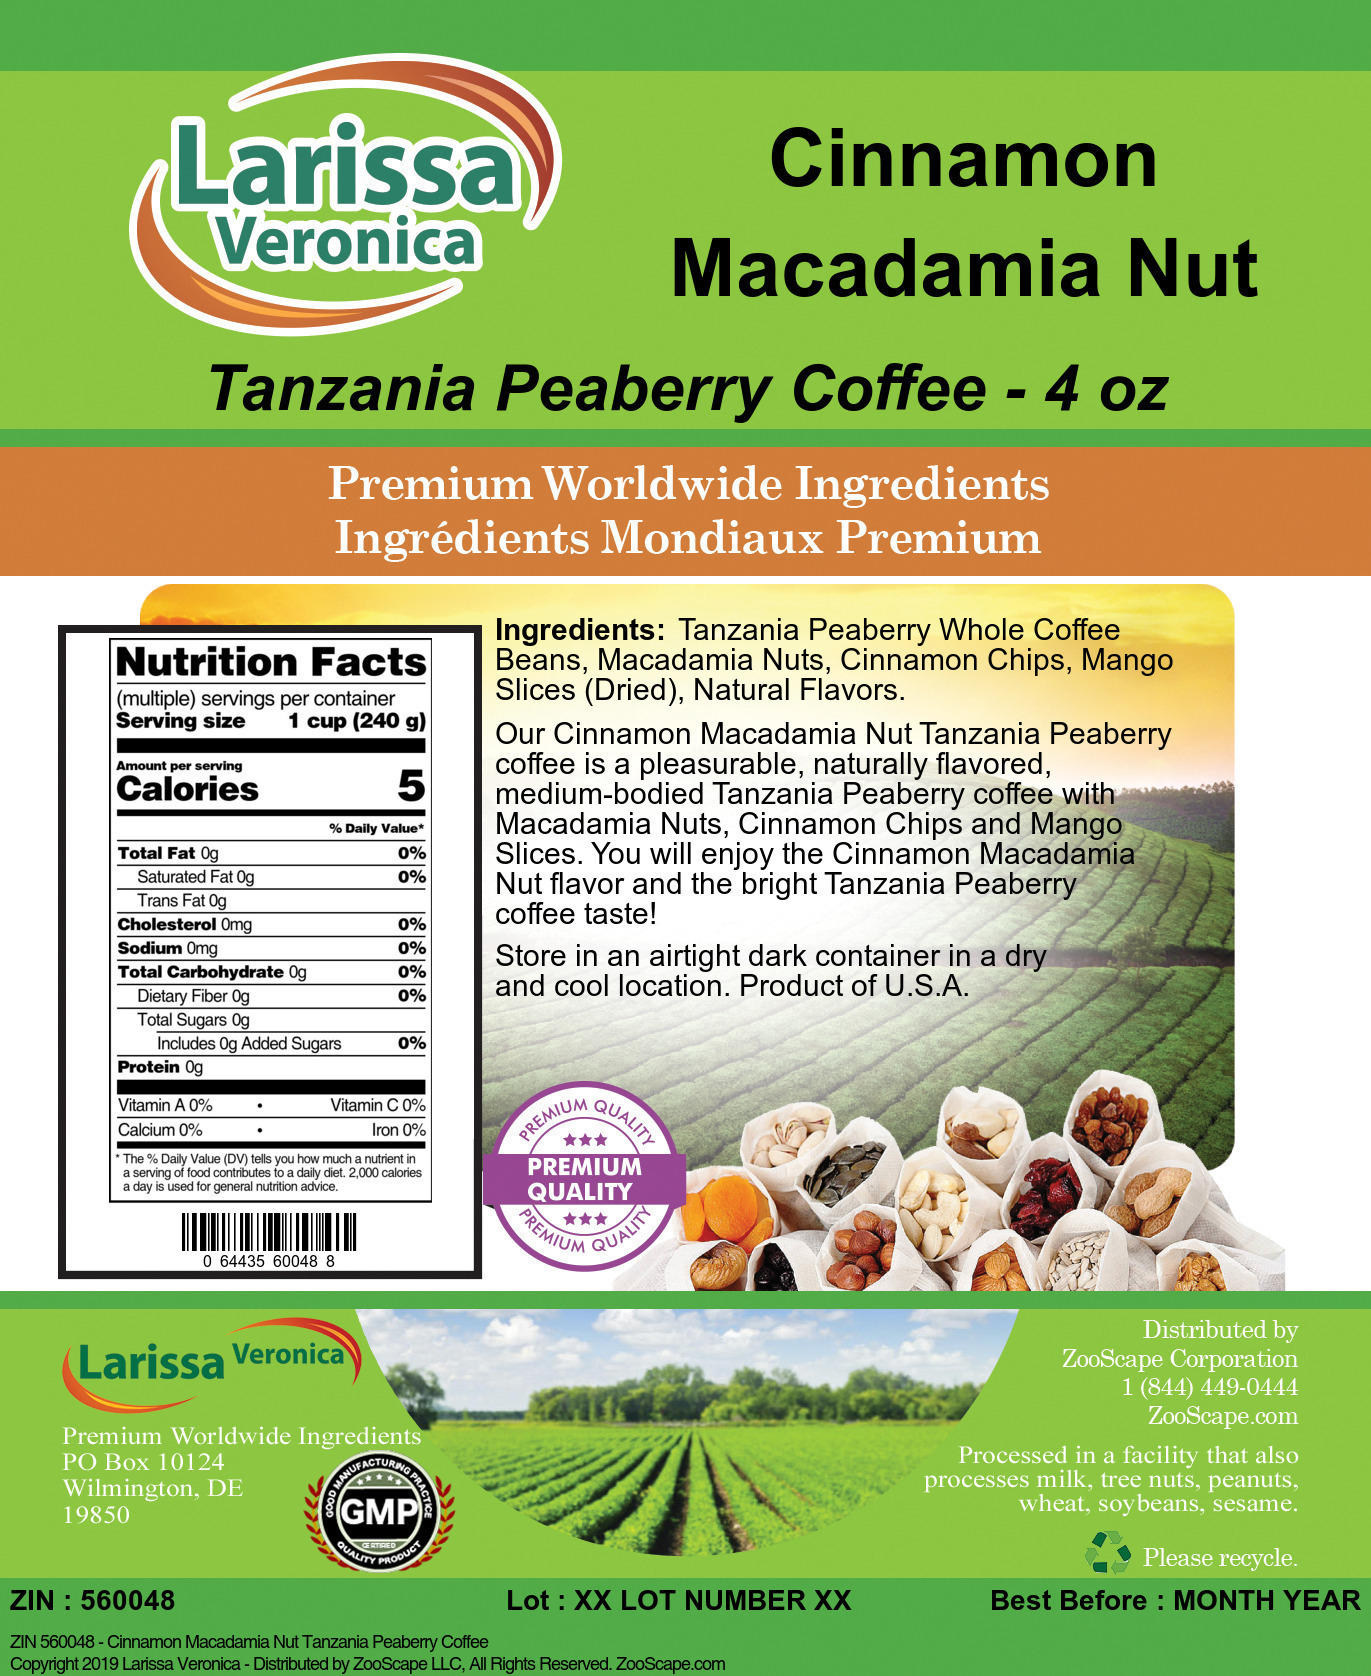 Cinnamon Macadamia Nut Tanzania Peaberry Coffee - Label